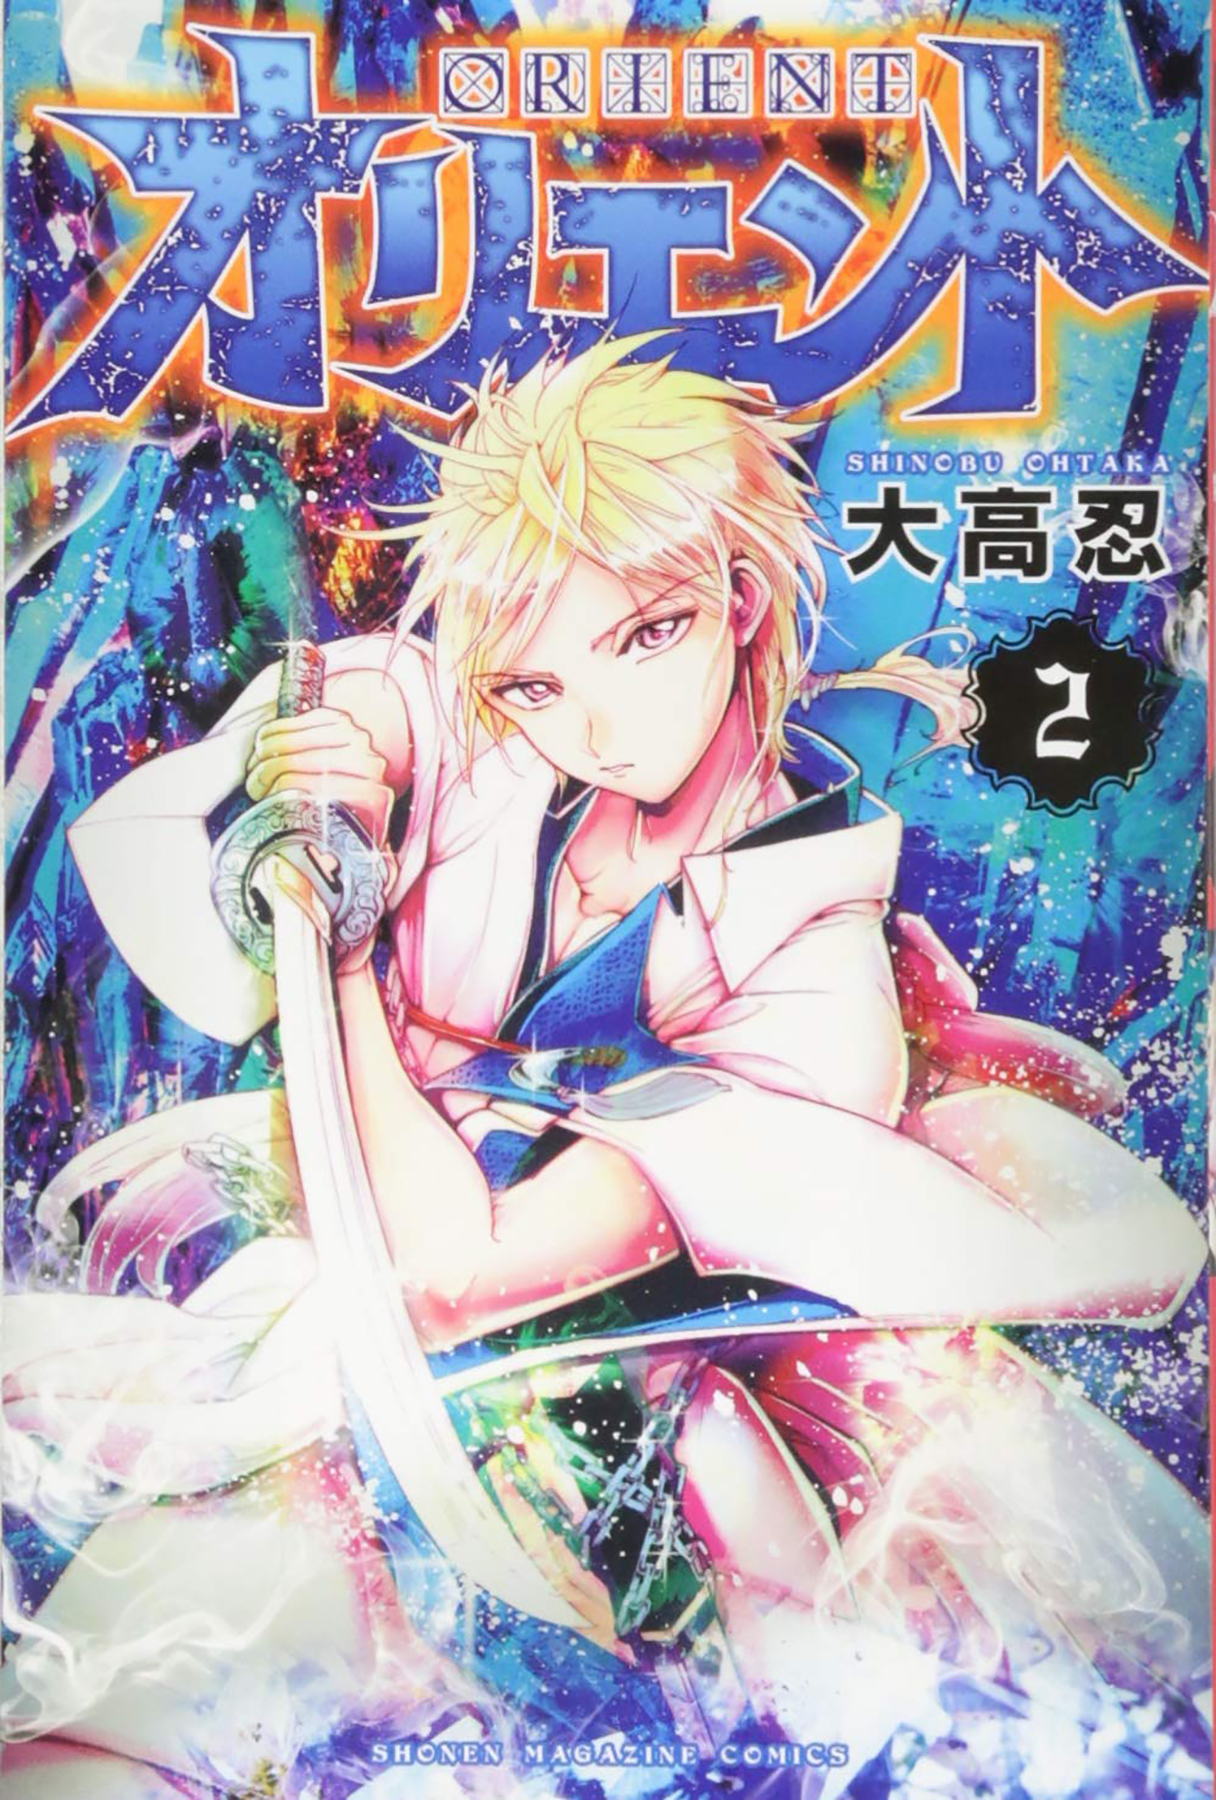 Orient Manga Volume 2